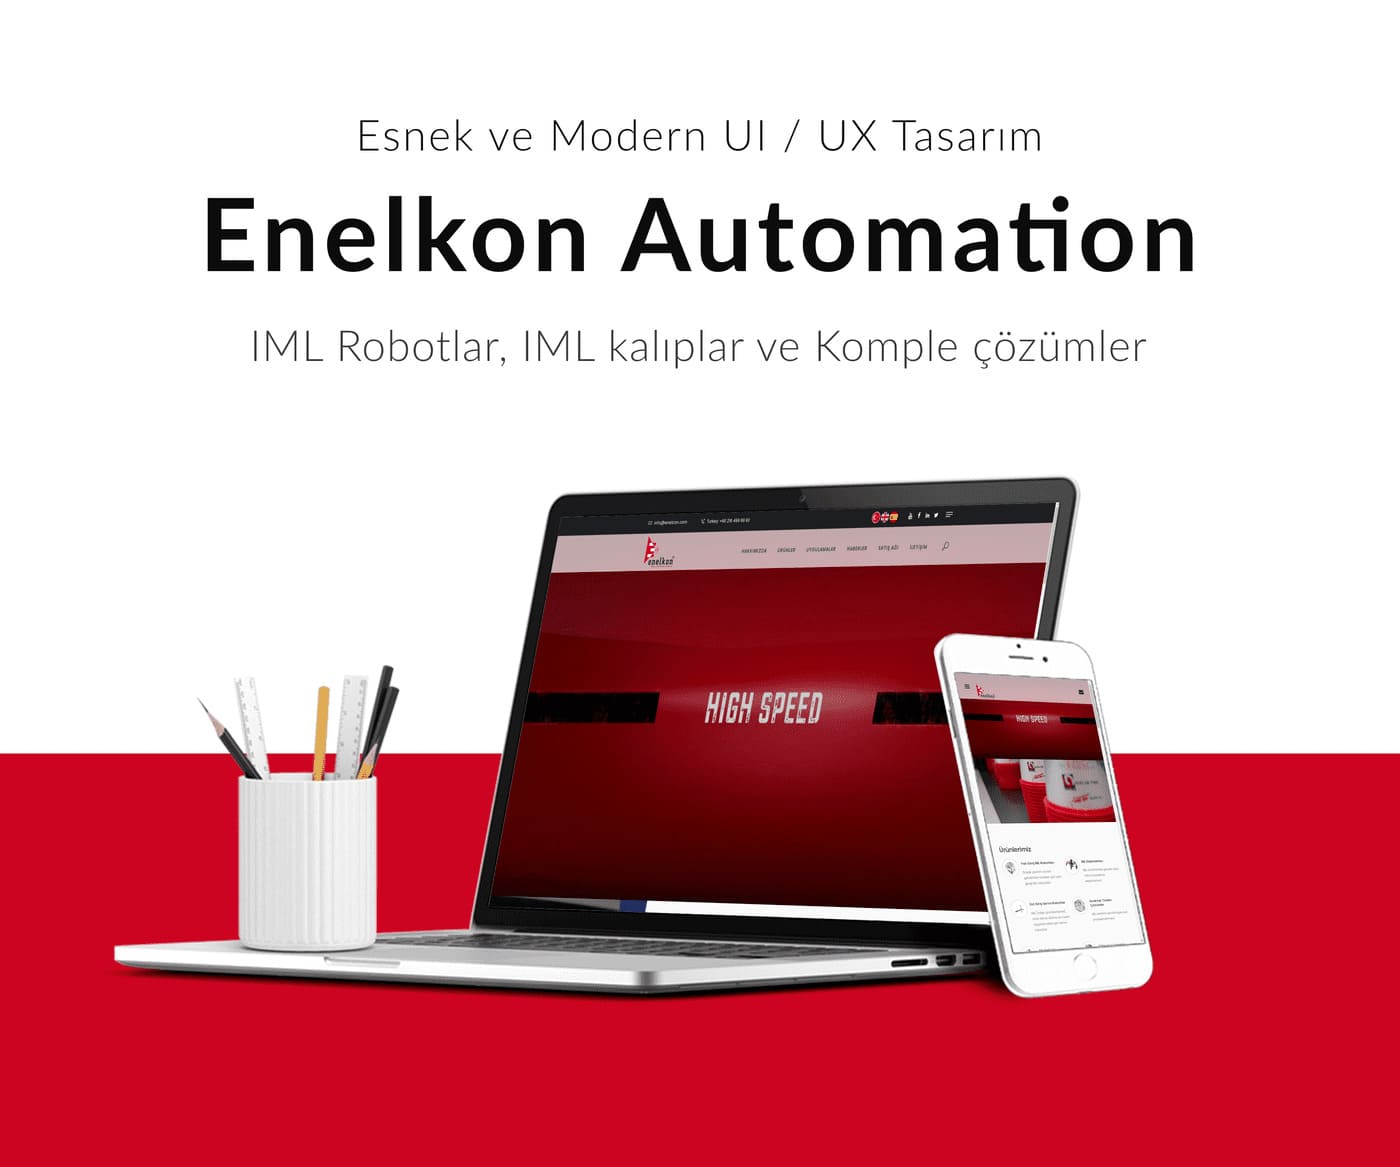 Enelkon Automation